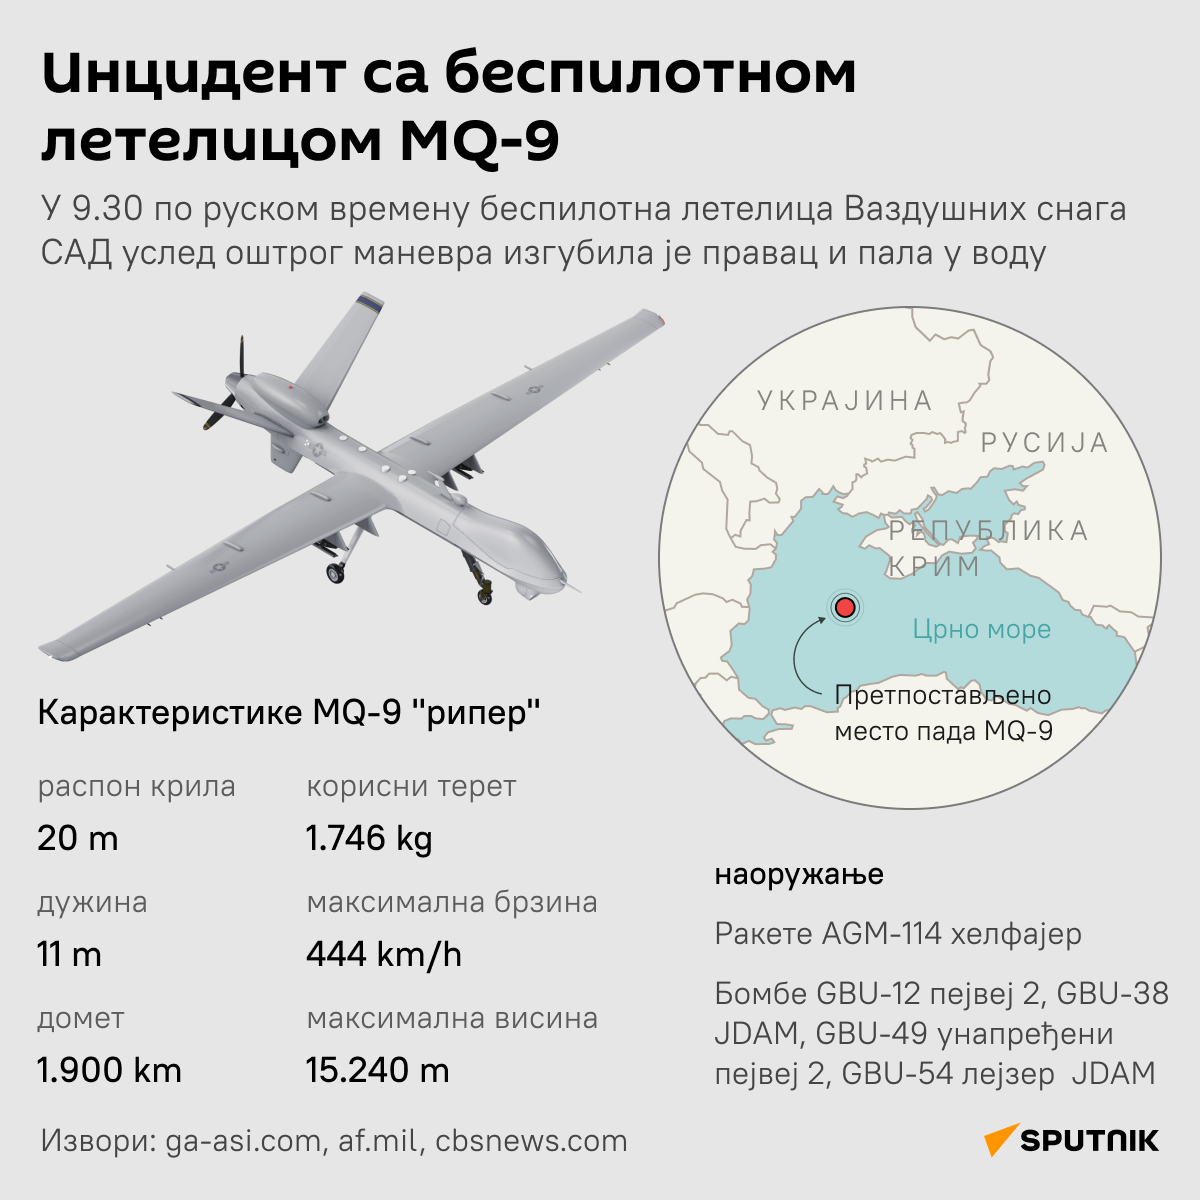 Амерички дрон MQ-9 Reaper (жетелац)  ИНФОГРАФИКА Ћирилица деск - Sputnik Србија